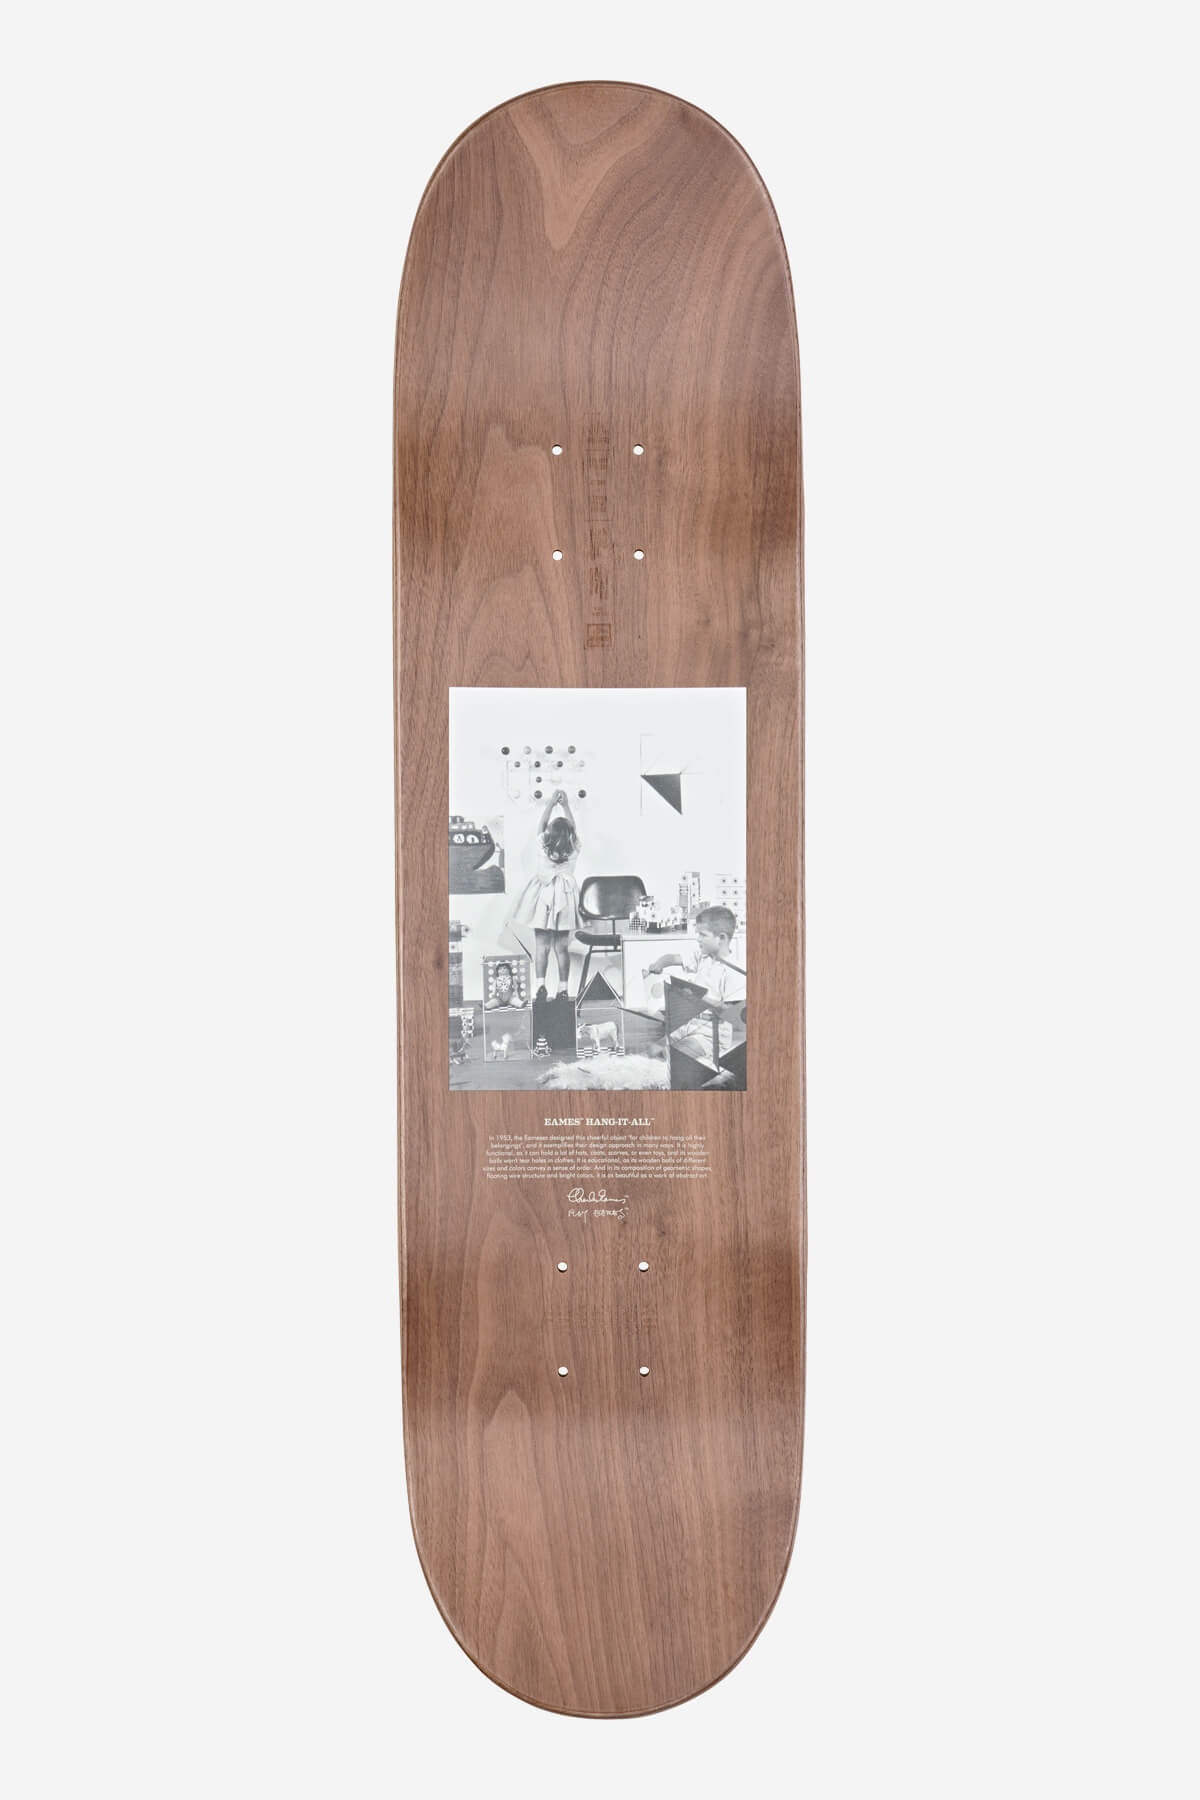 Globe - Eames silhouet - Hang-het-allemaal - 8,25". Skateboard Deck